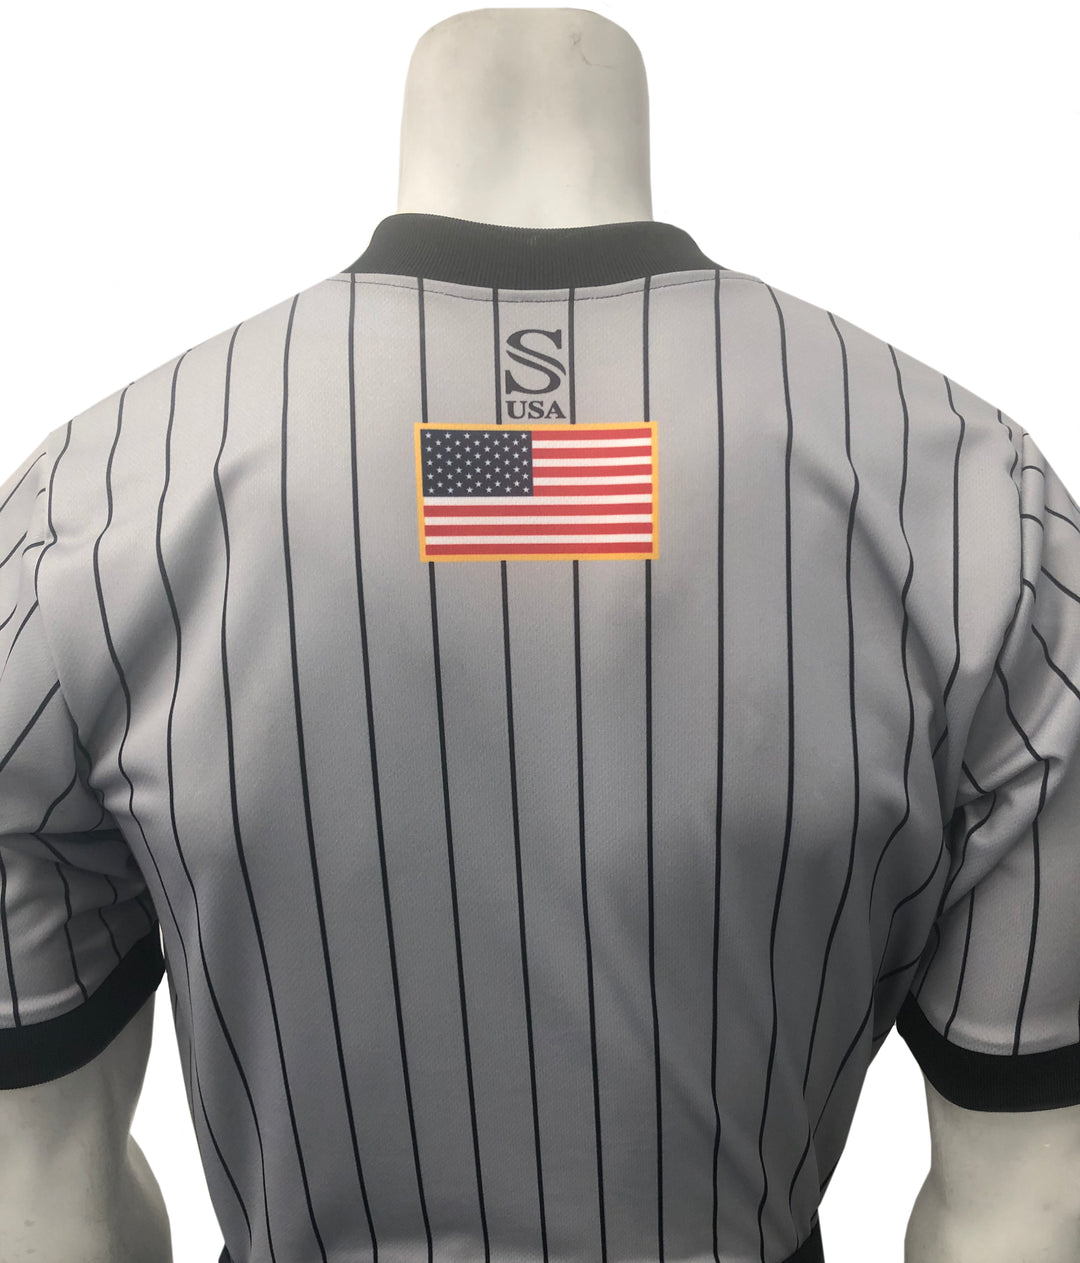 USA205FL-WR - Smitty "Made in USA" - Men's Wrestling Short Sleeve Shirt